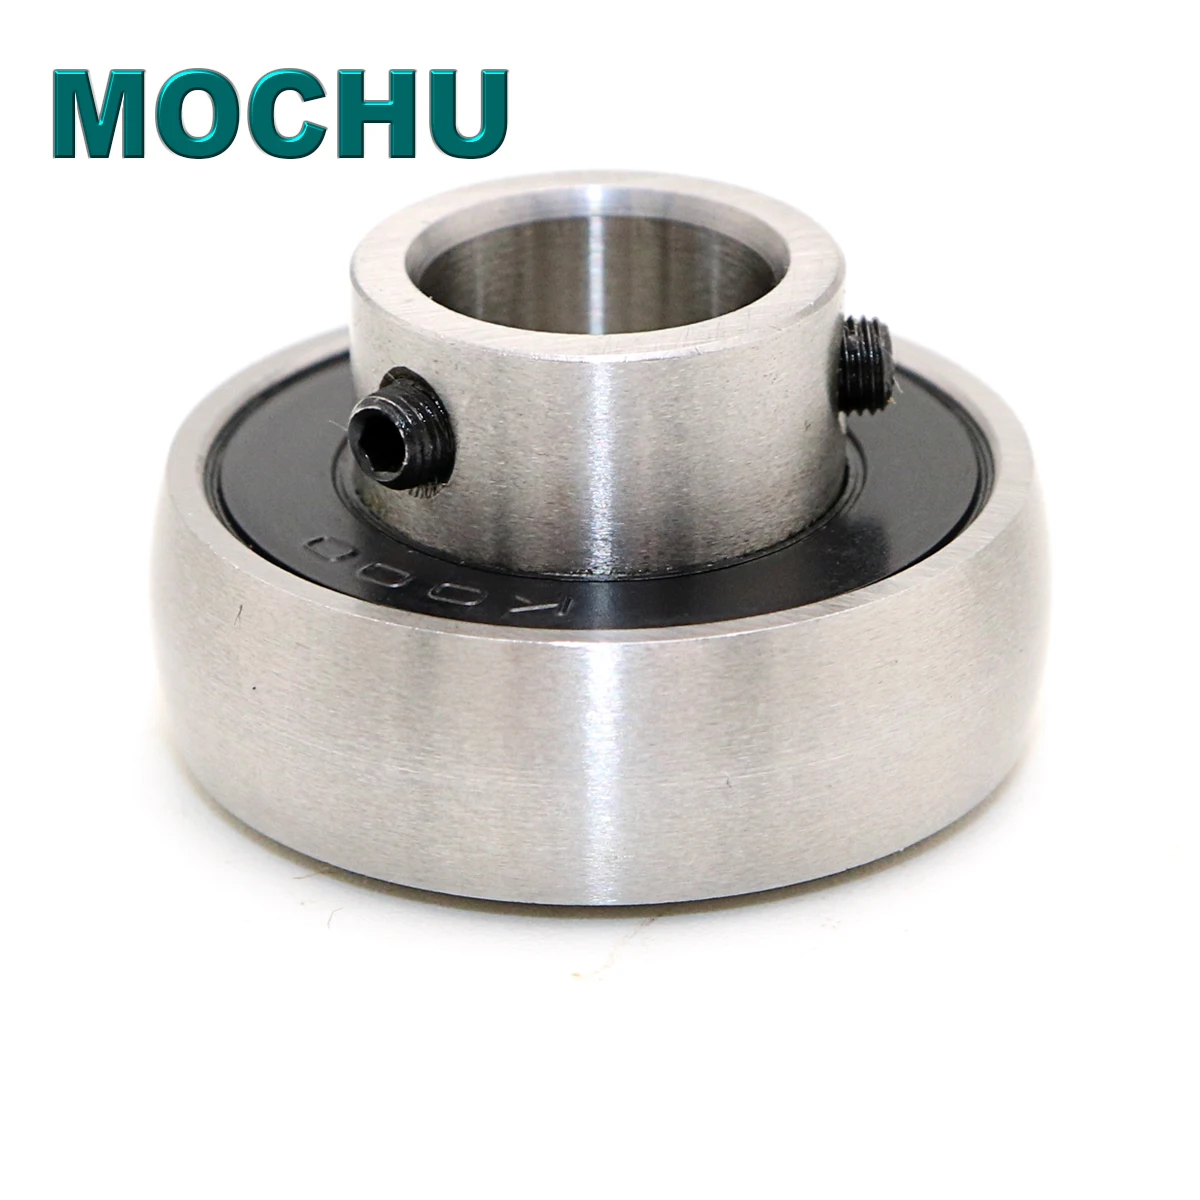 mochu-17mm-k003-17x35x10-insert-bearing-setscrew-locking